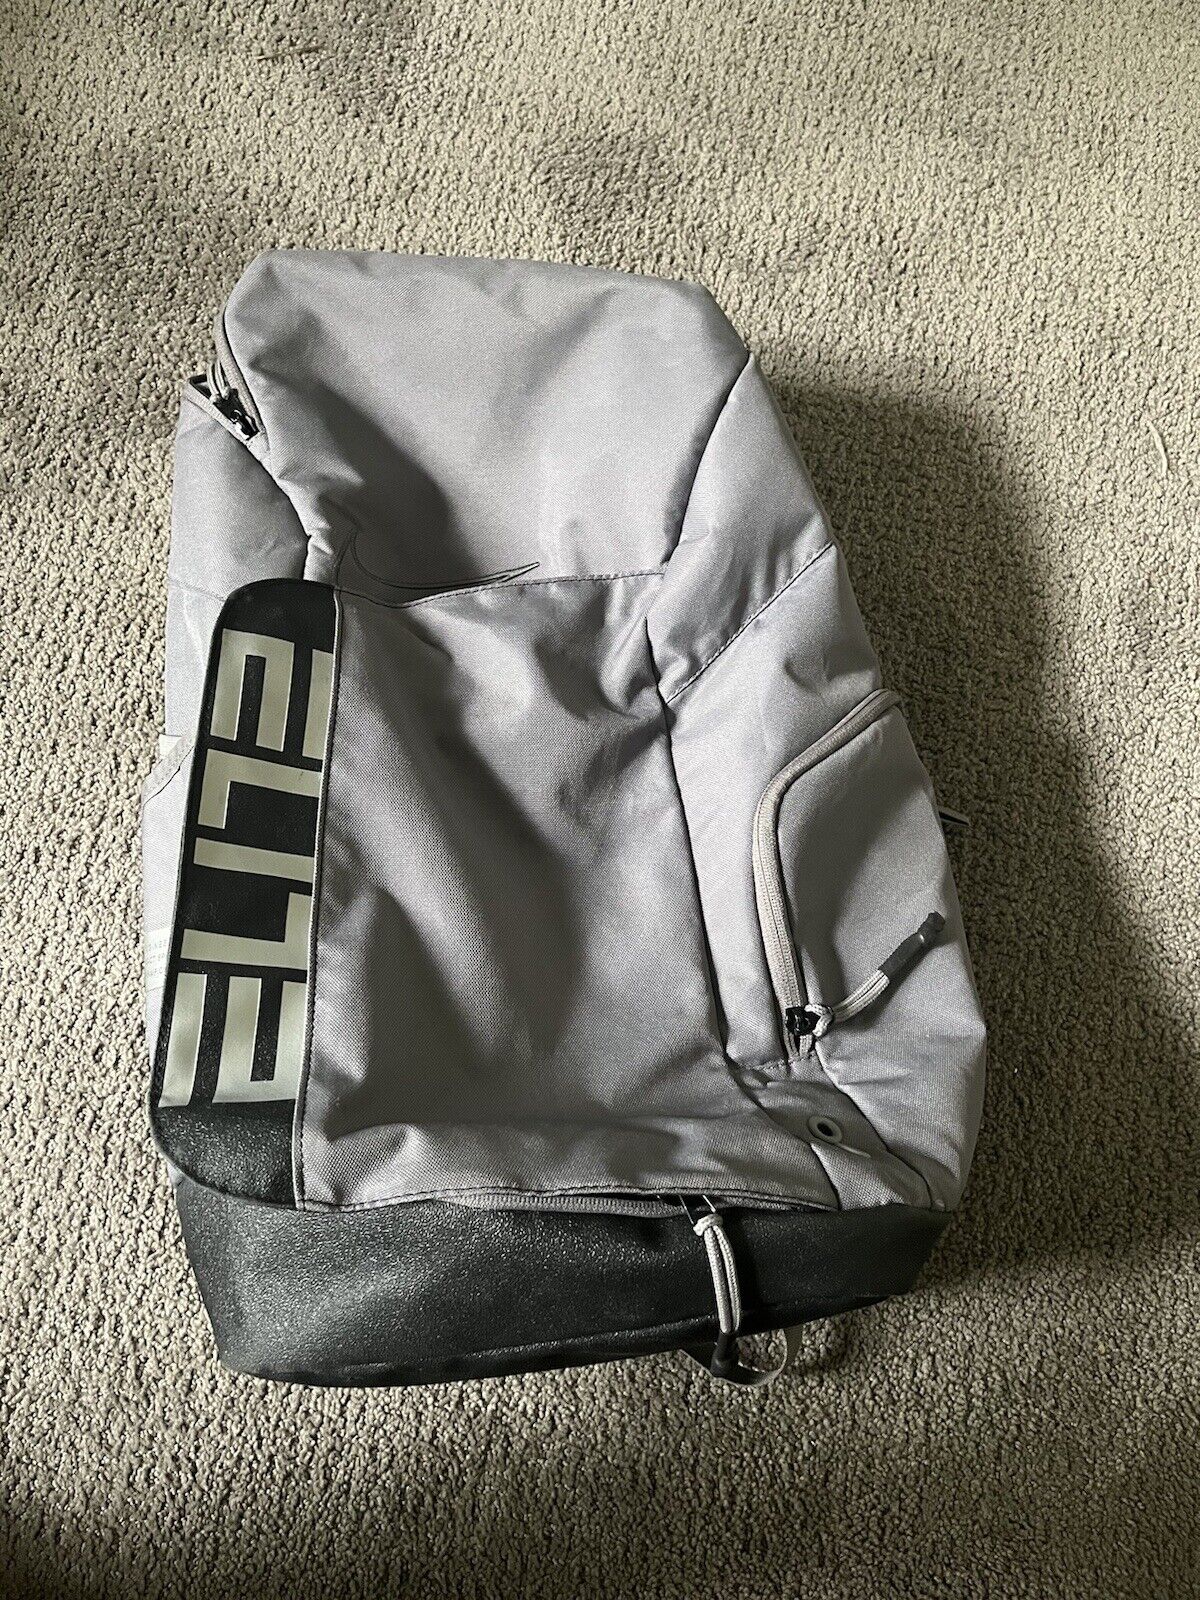 Nike elite pro basketball backpack Gray